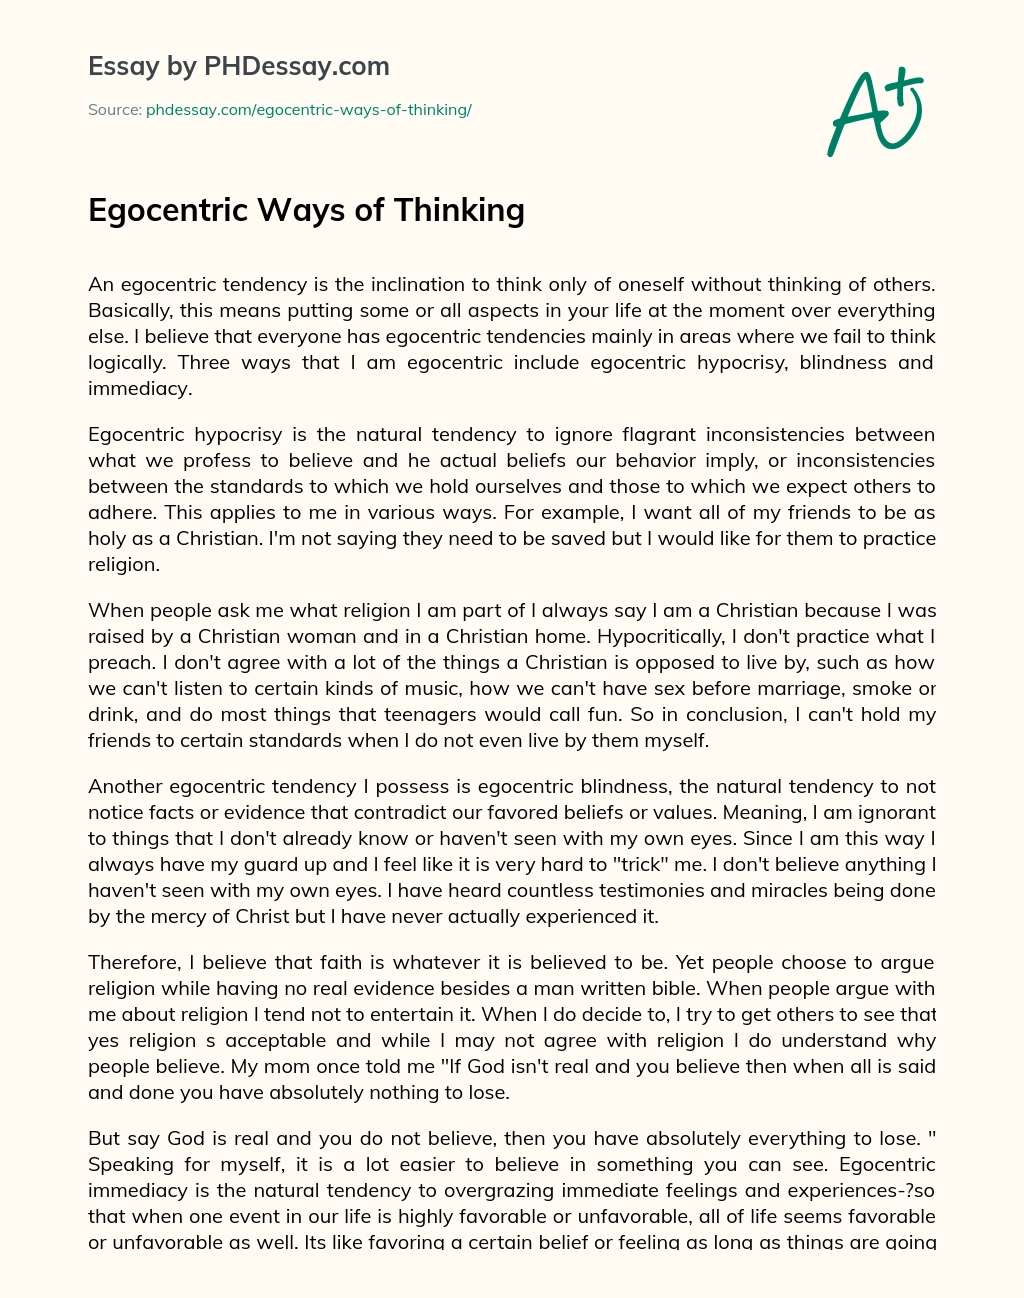 Egocentric Ways of Thinking essay